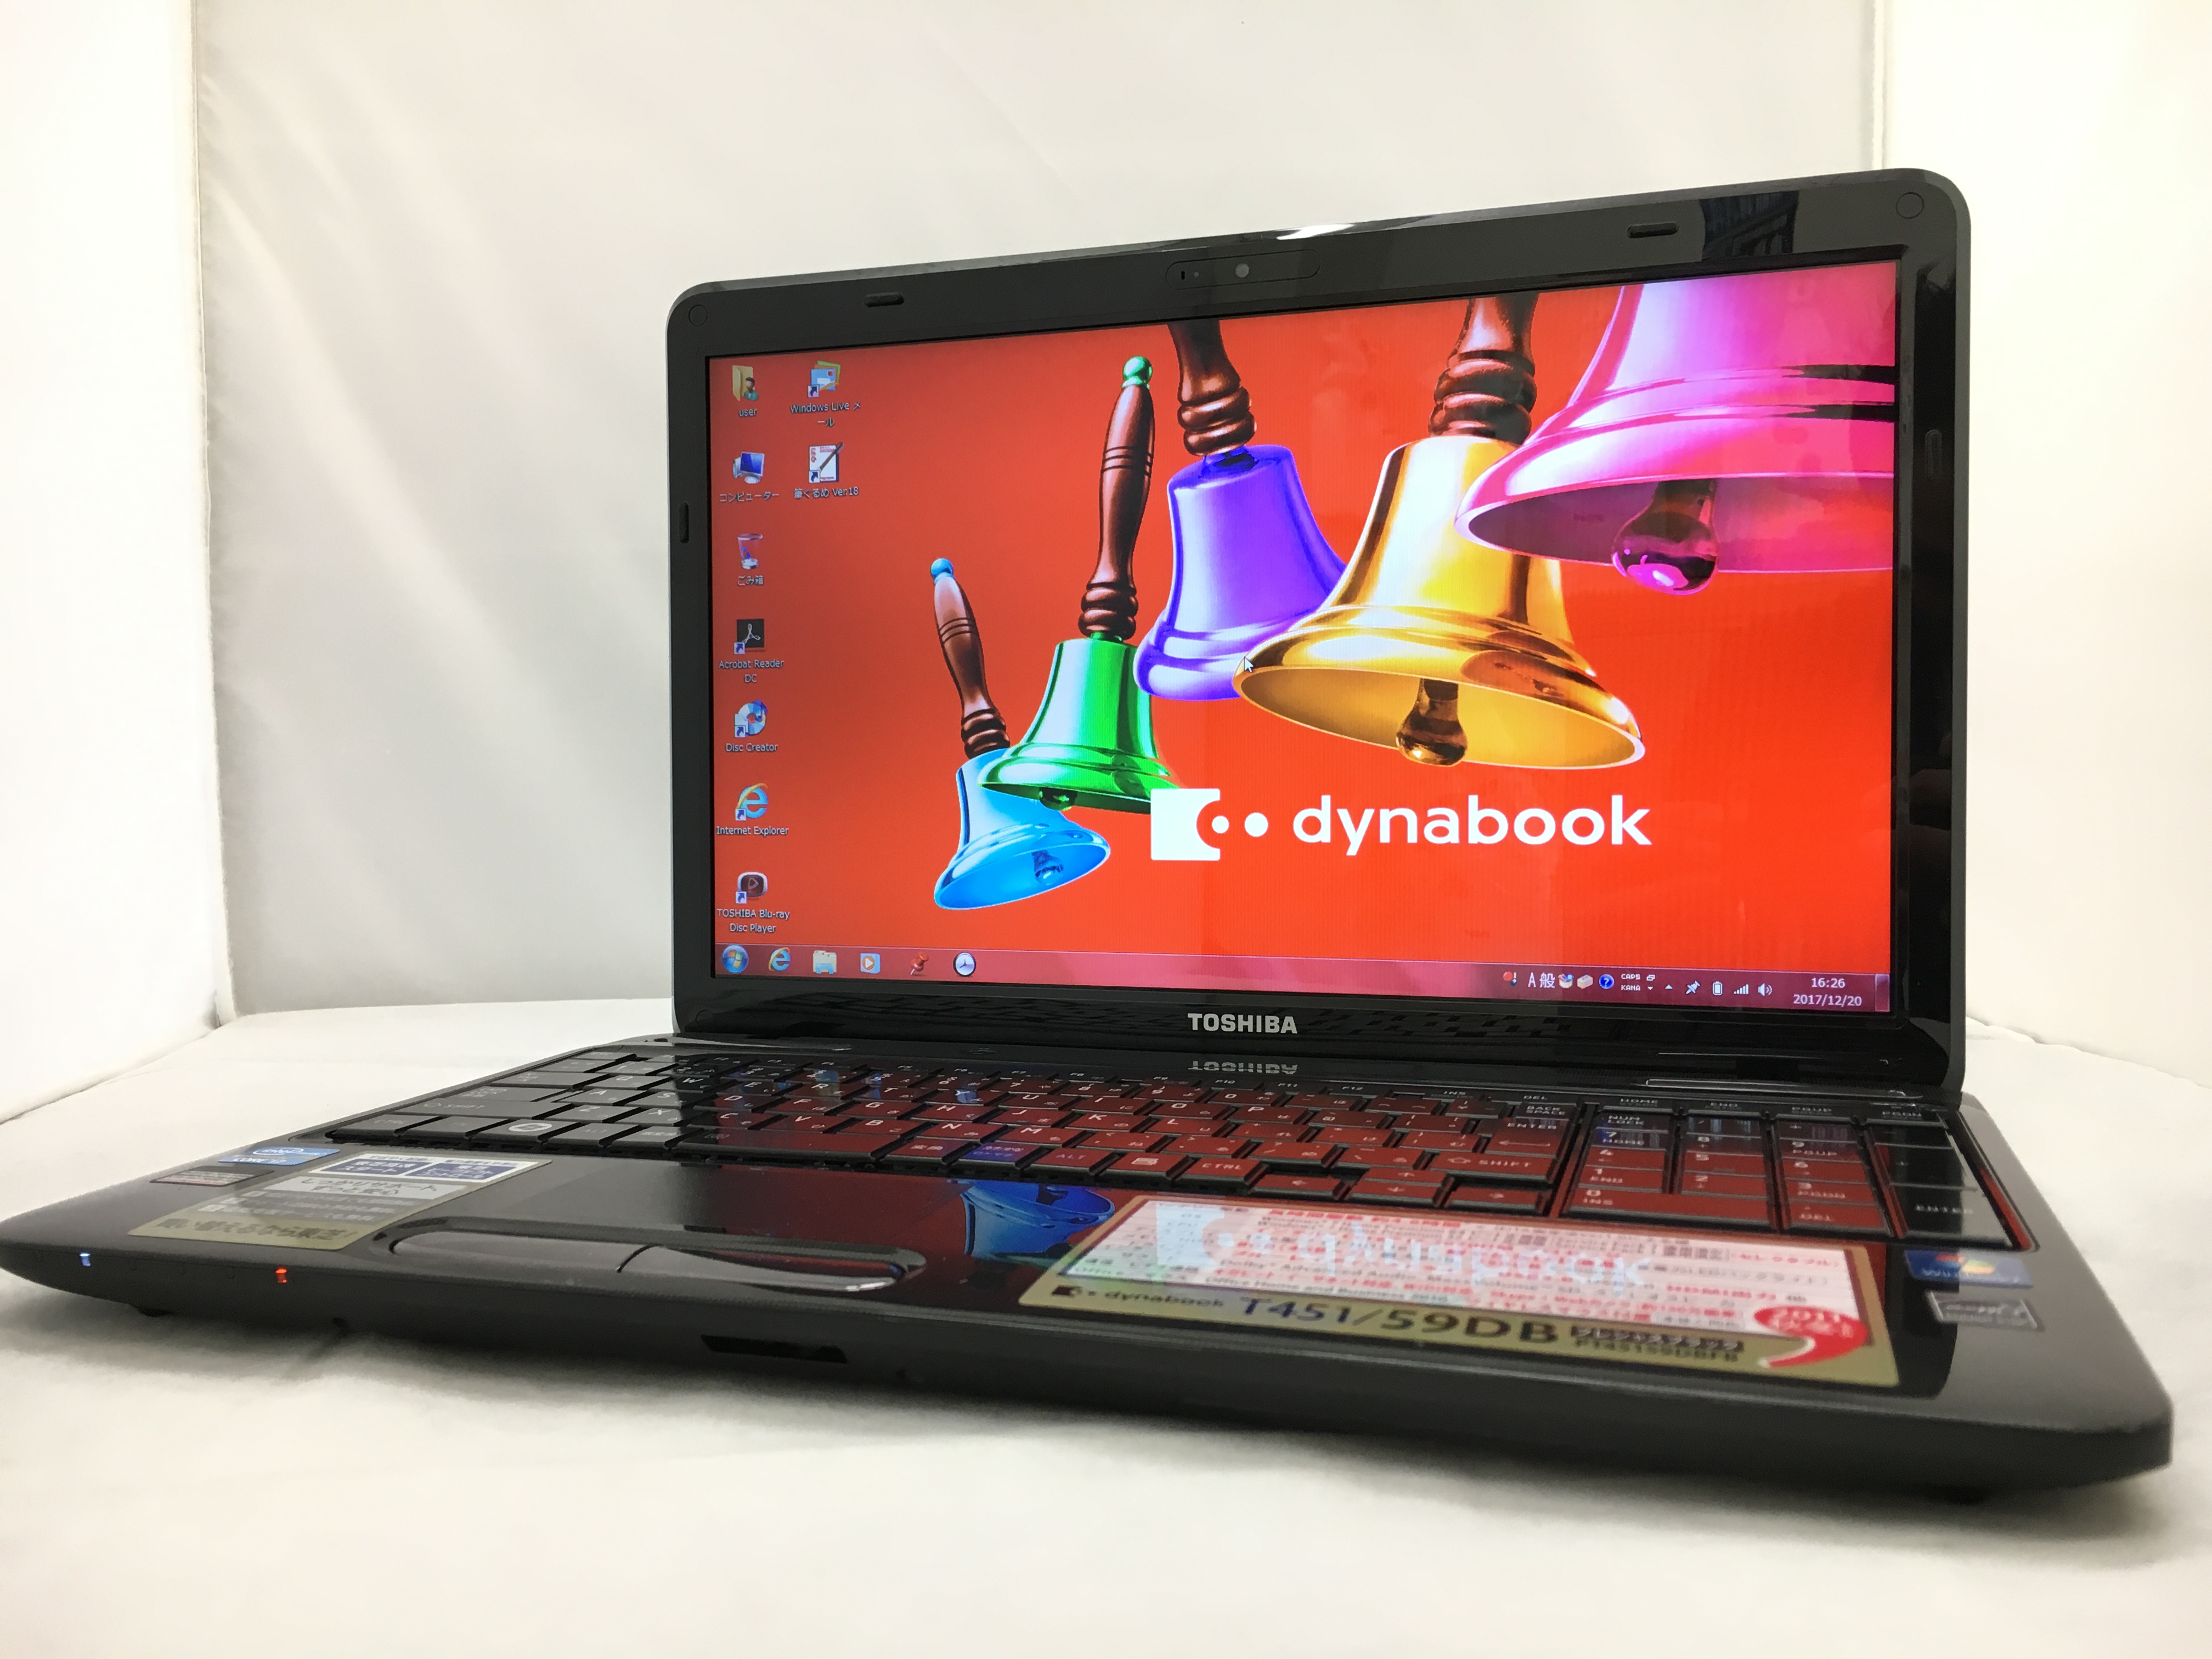 TOSHIBA ノートパソコン Dynabook T451/59DB